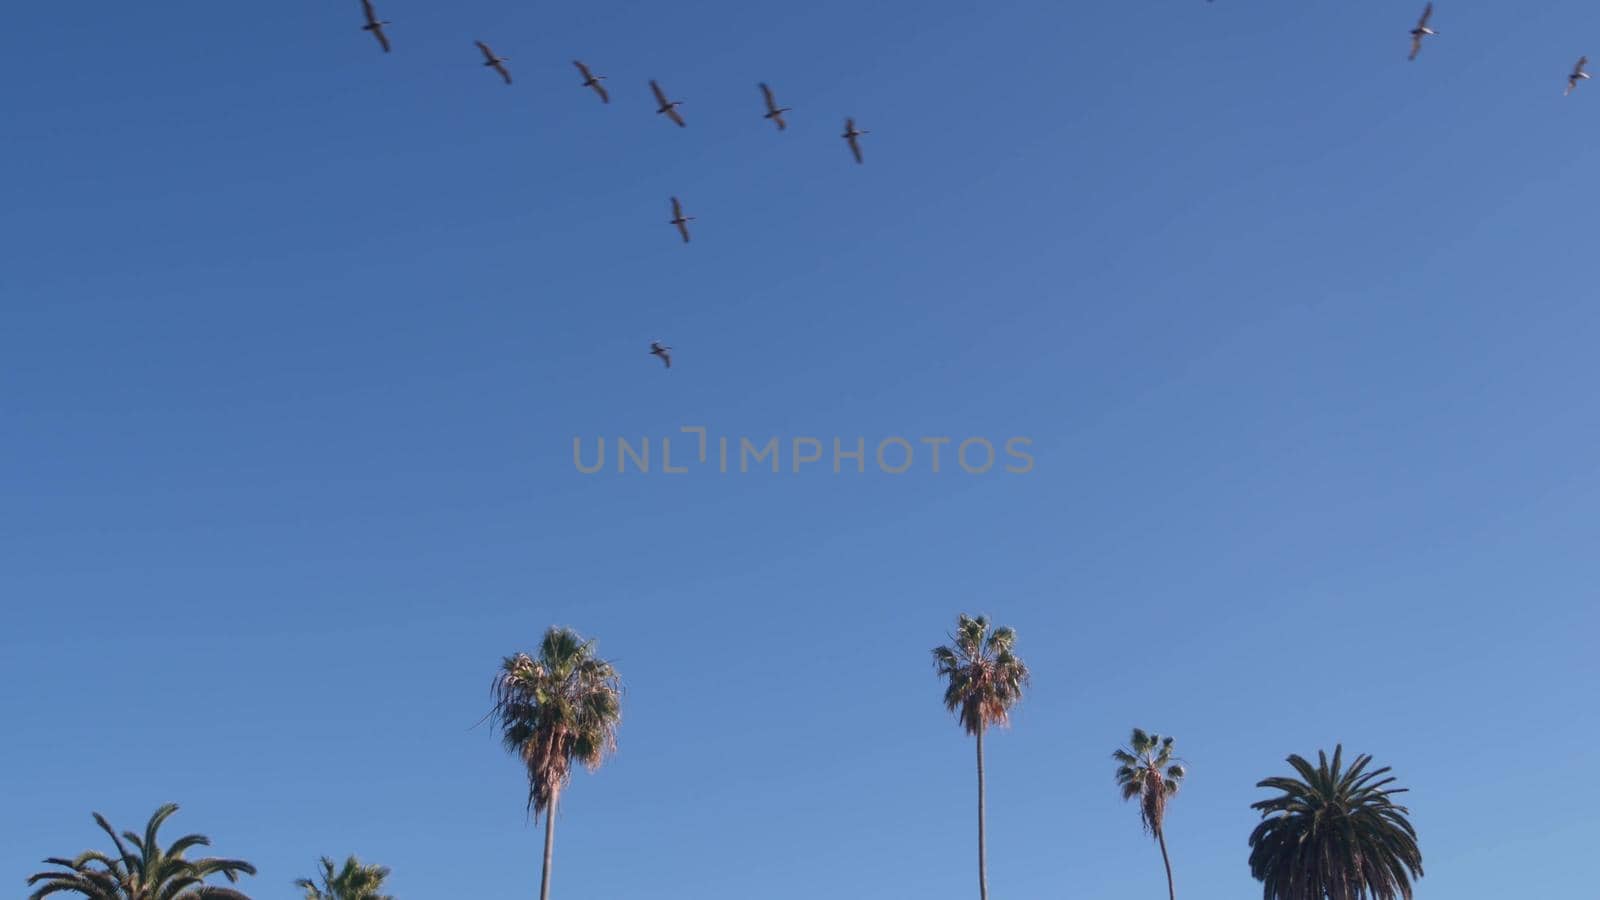 Flock of wild brown pelican flying, blue sky, palm trees by beach, California coast wildlife, USA summertime aesthetic. Many pelecanus soaring, flight above ocean in freedom. Birds wingspan, palmtrees